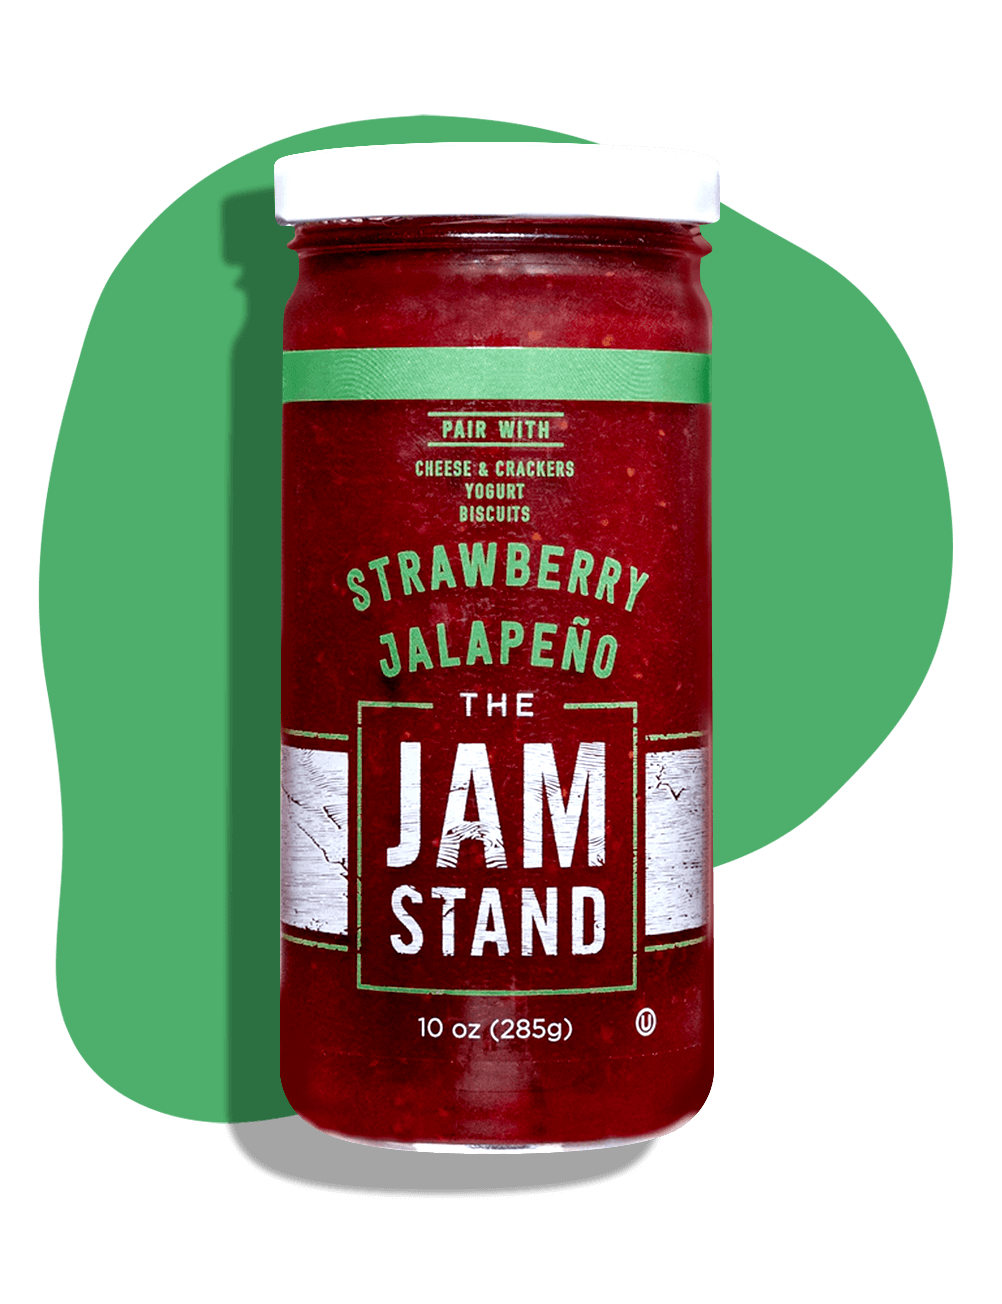 The Jam Stand: Strawberry Jalapeno Jam